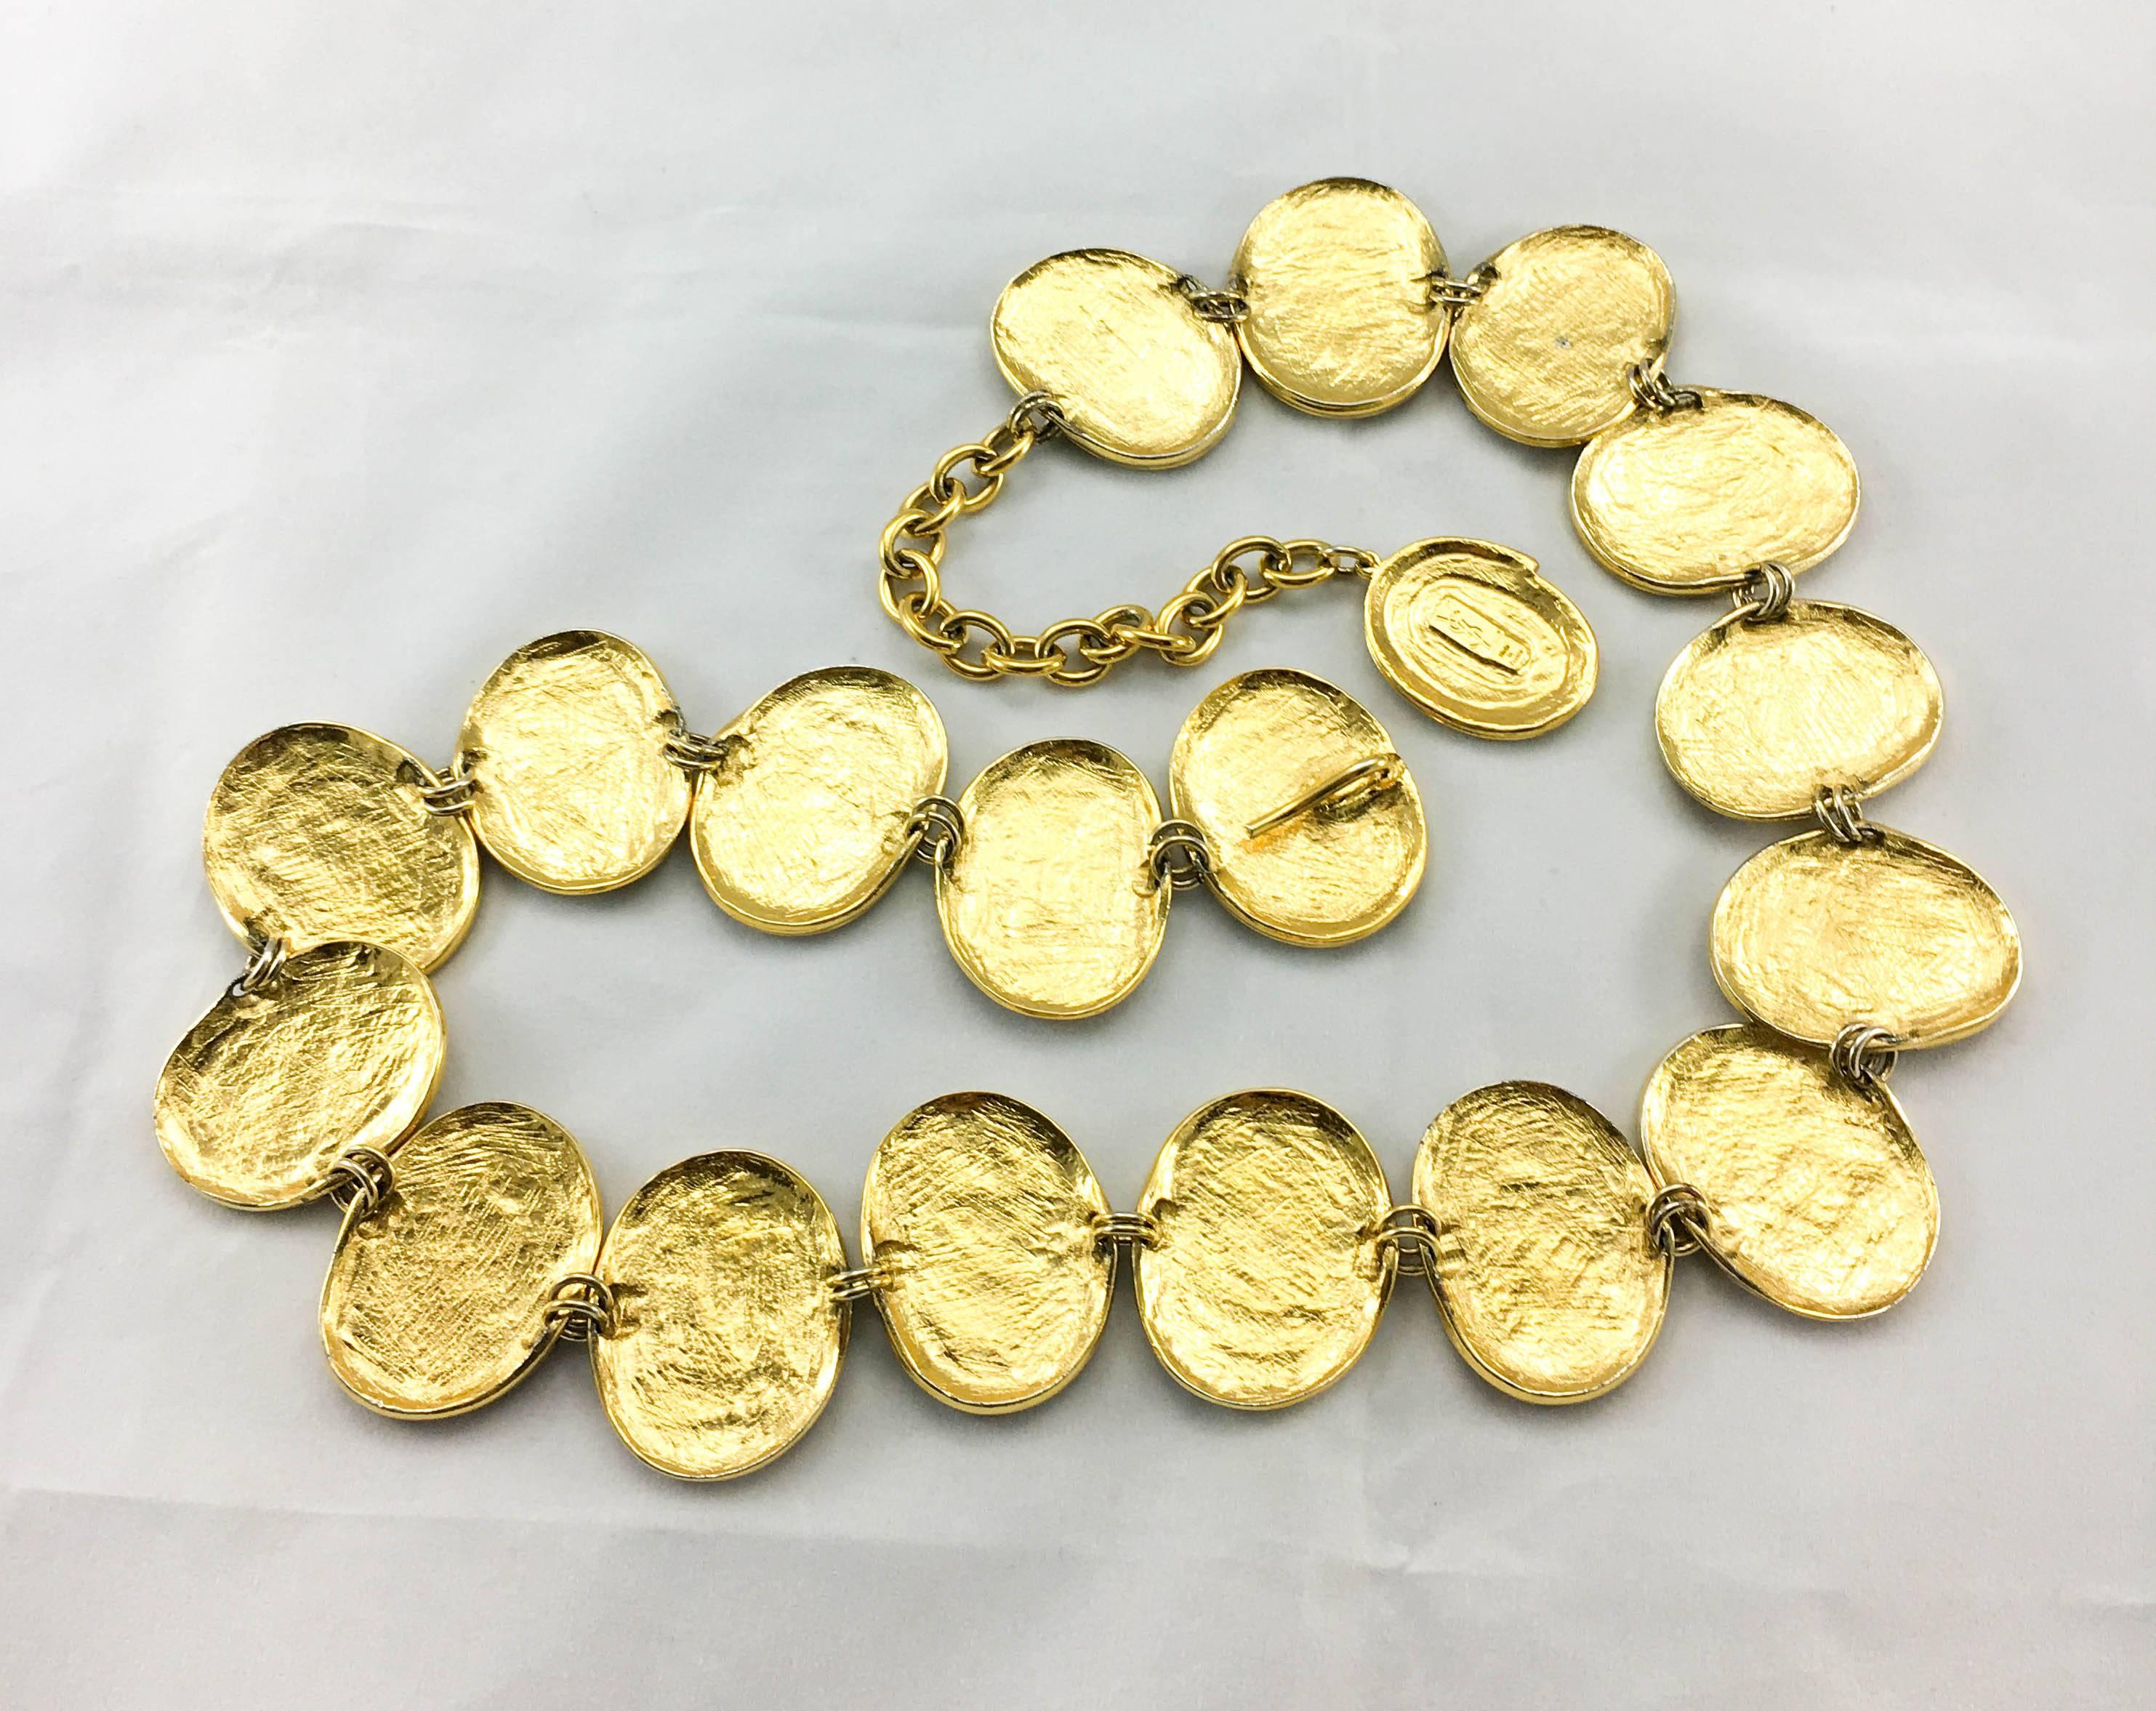 Yves Saint Laurent Gold-Plated 'Spiral' Belt / Necklace - 1980's 5